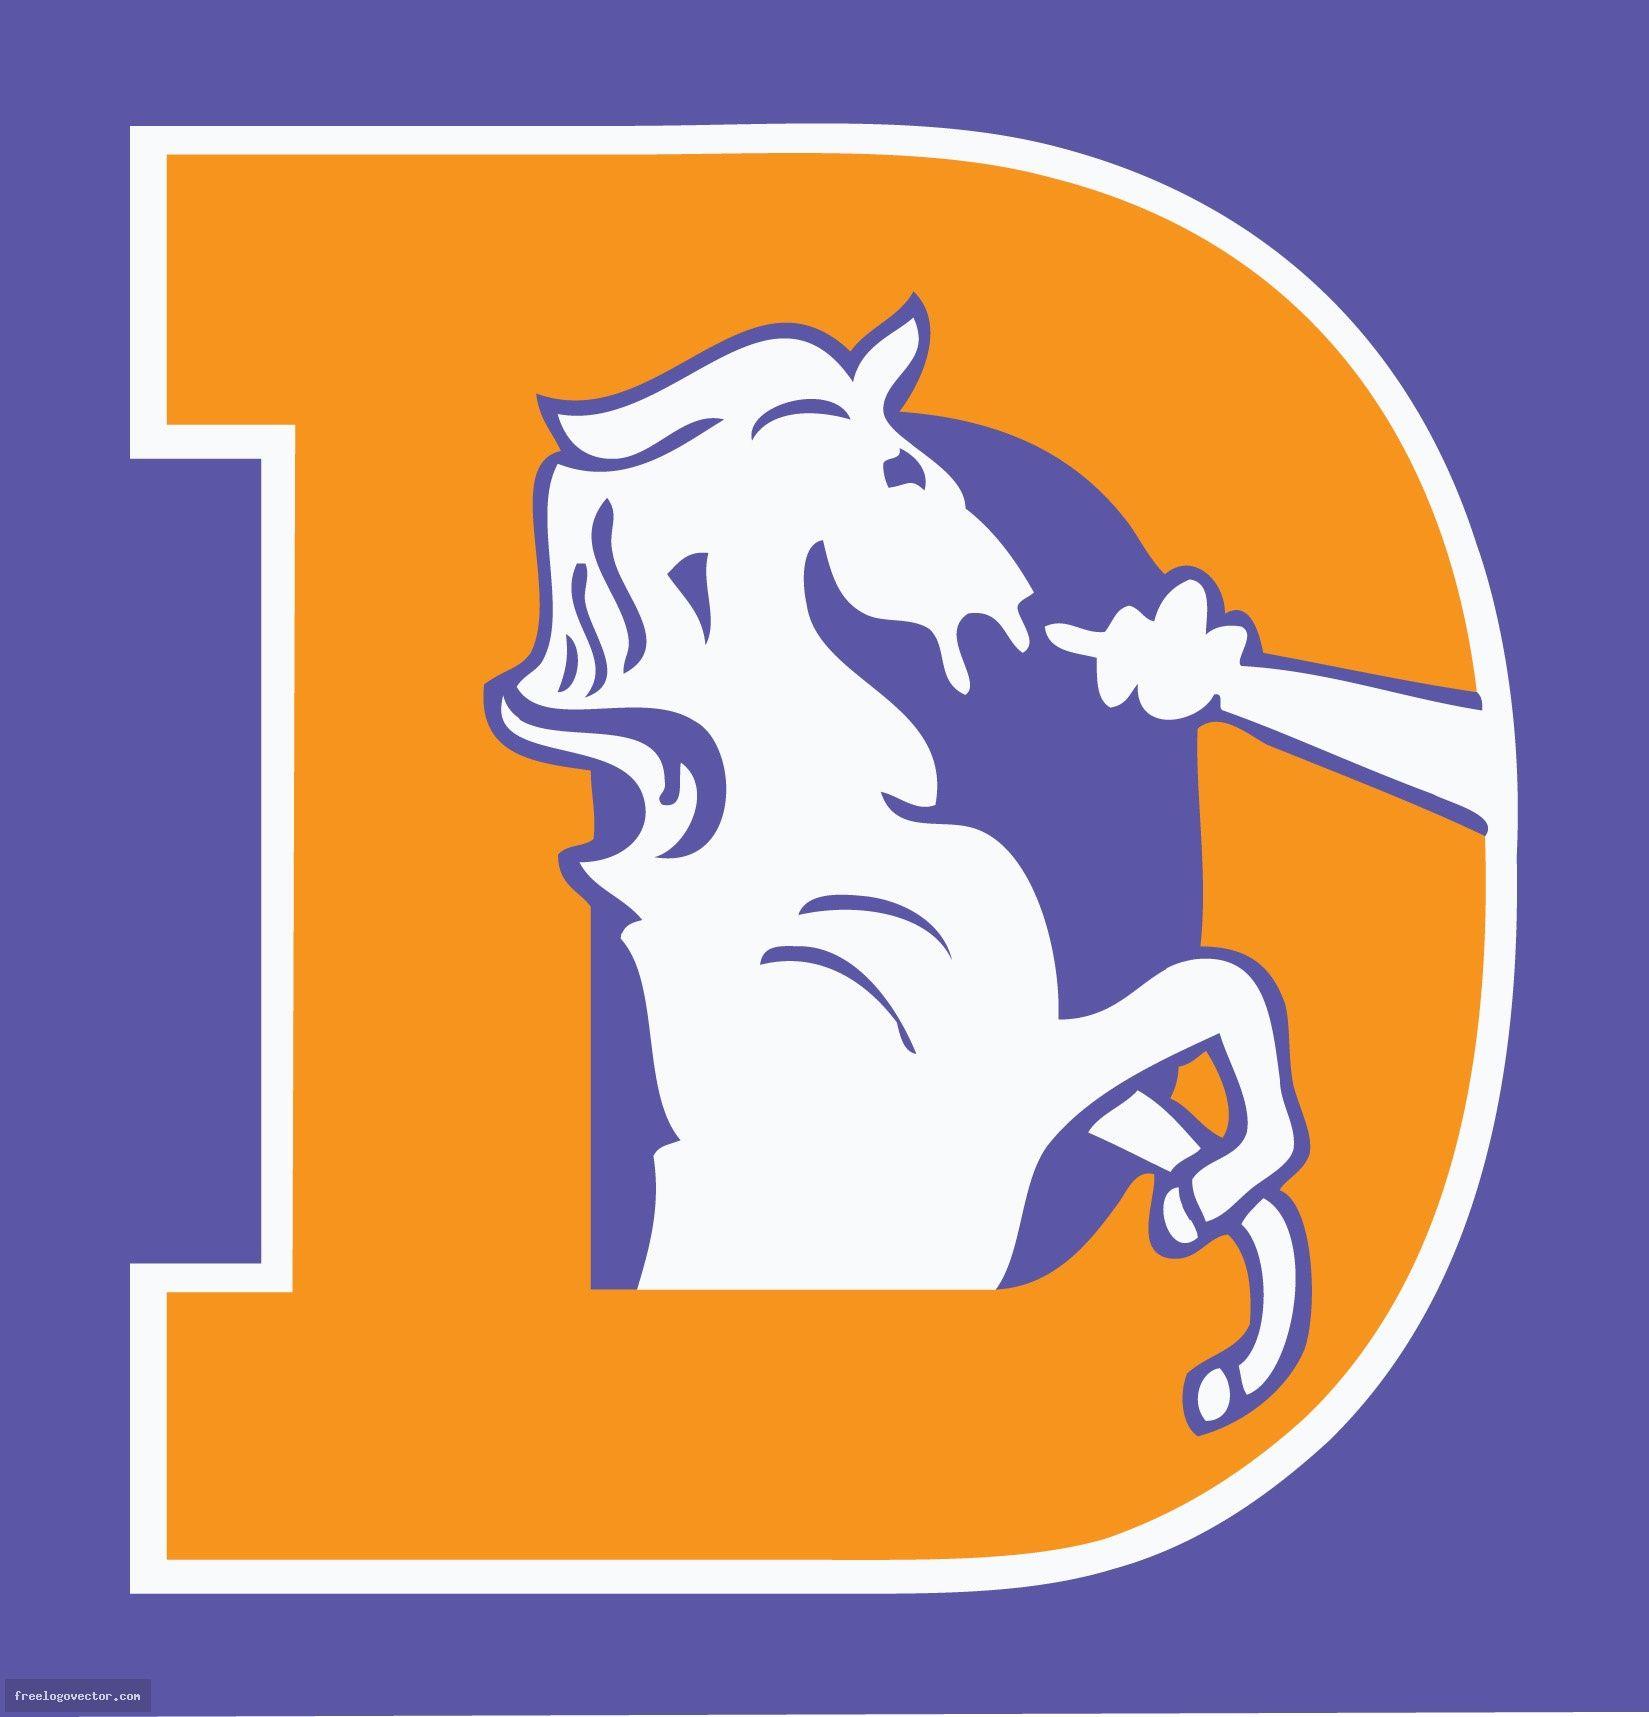 Denver Broncos Old Logo - Denver Broncos Old Logo NFL | BordoBello | Pinterest | Broncos ...